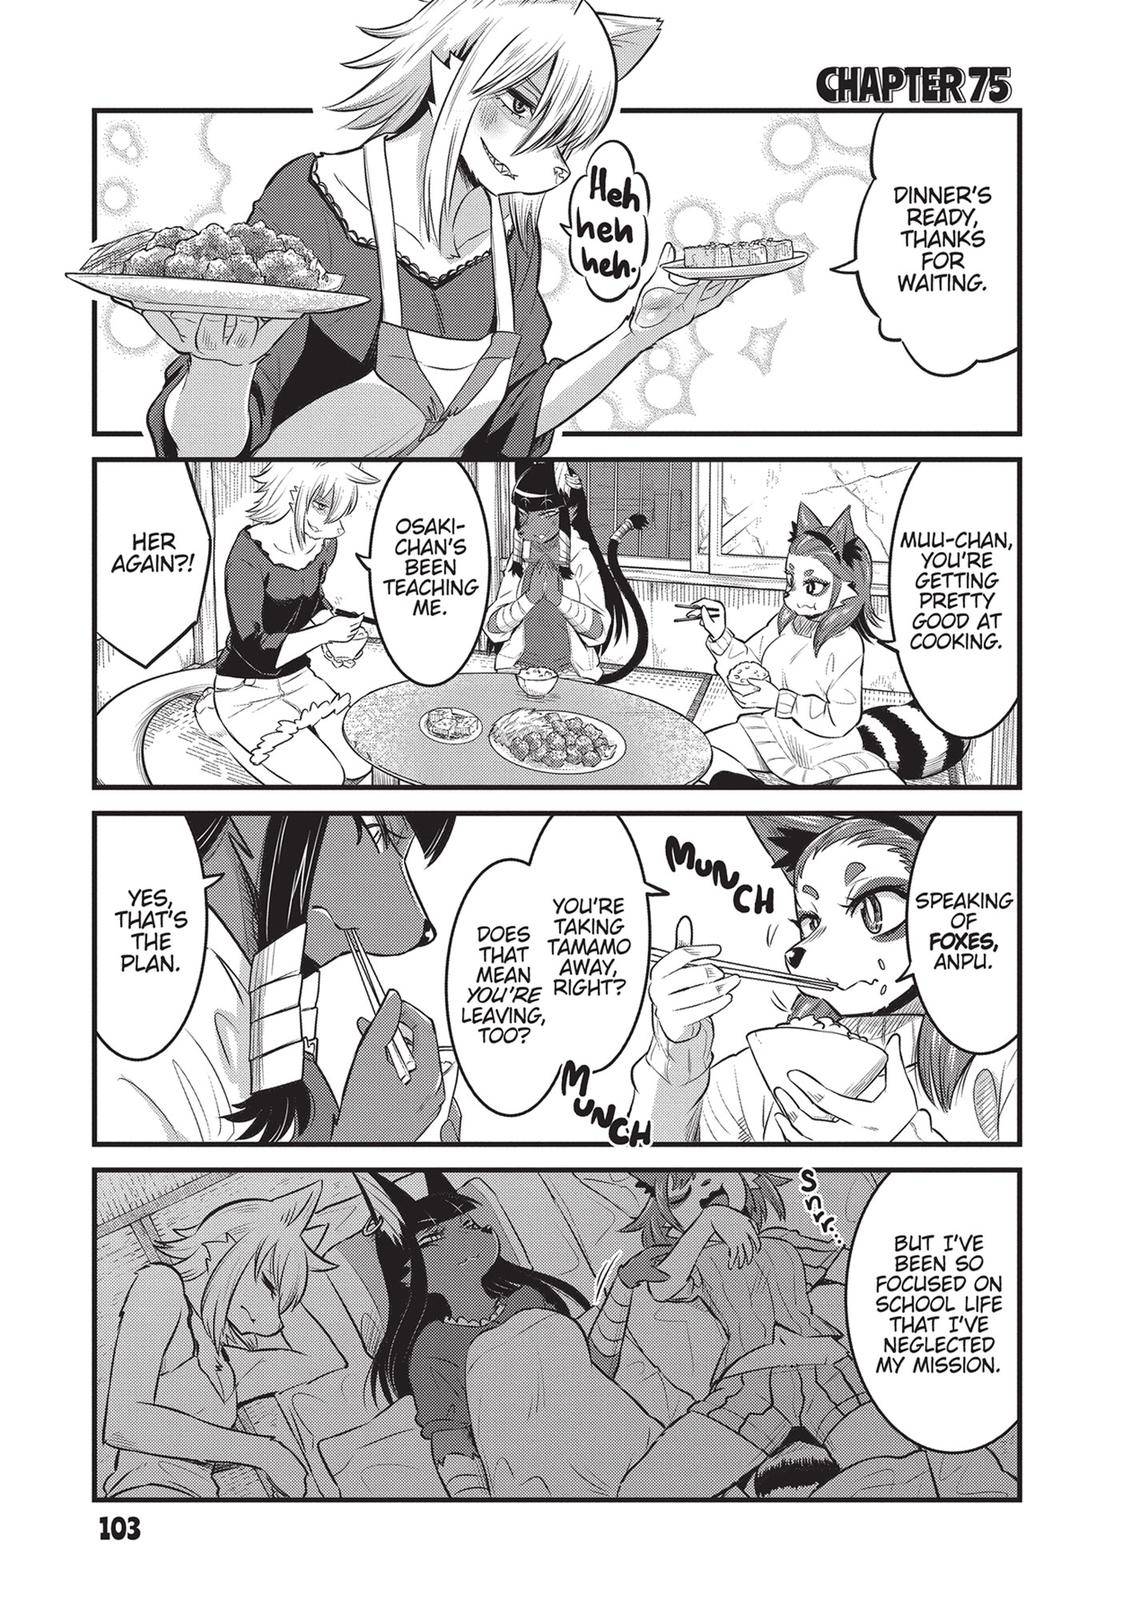 Tamamo-chan's a Fox! - chapter 75 - #1